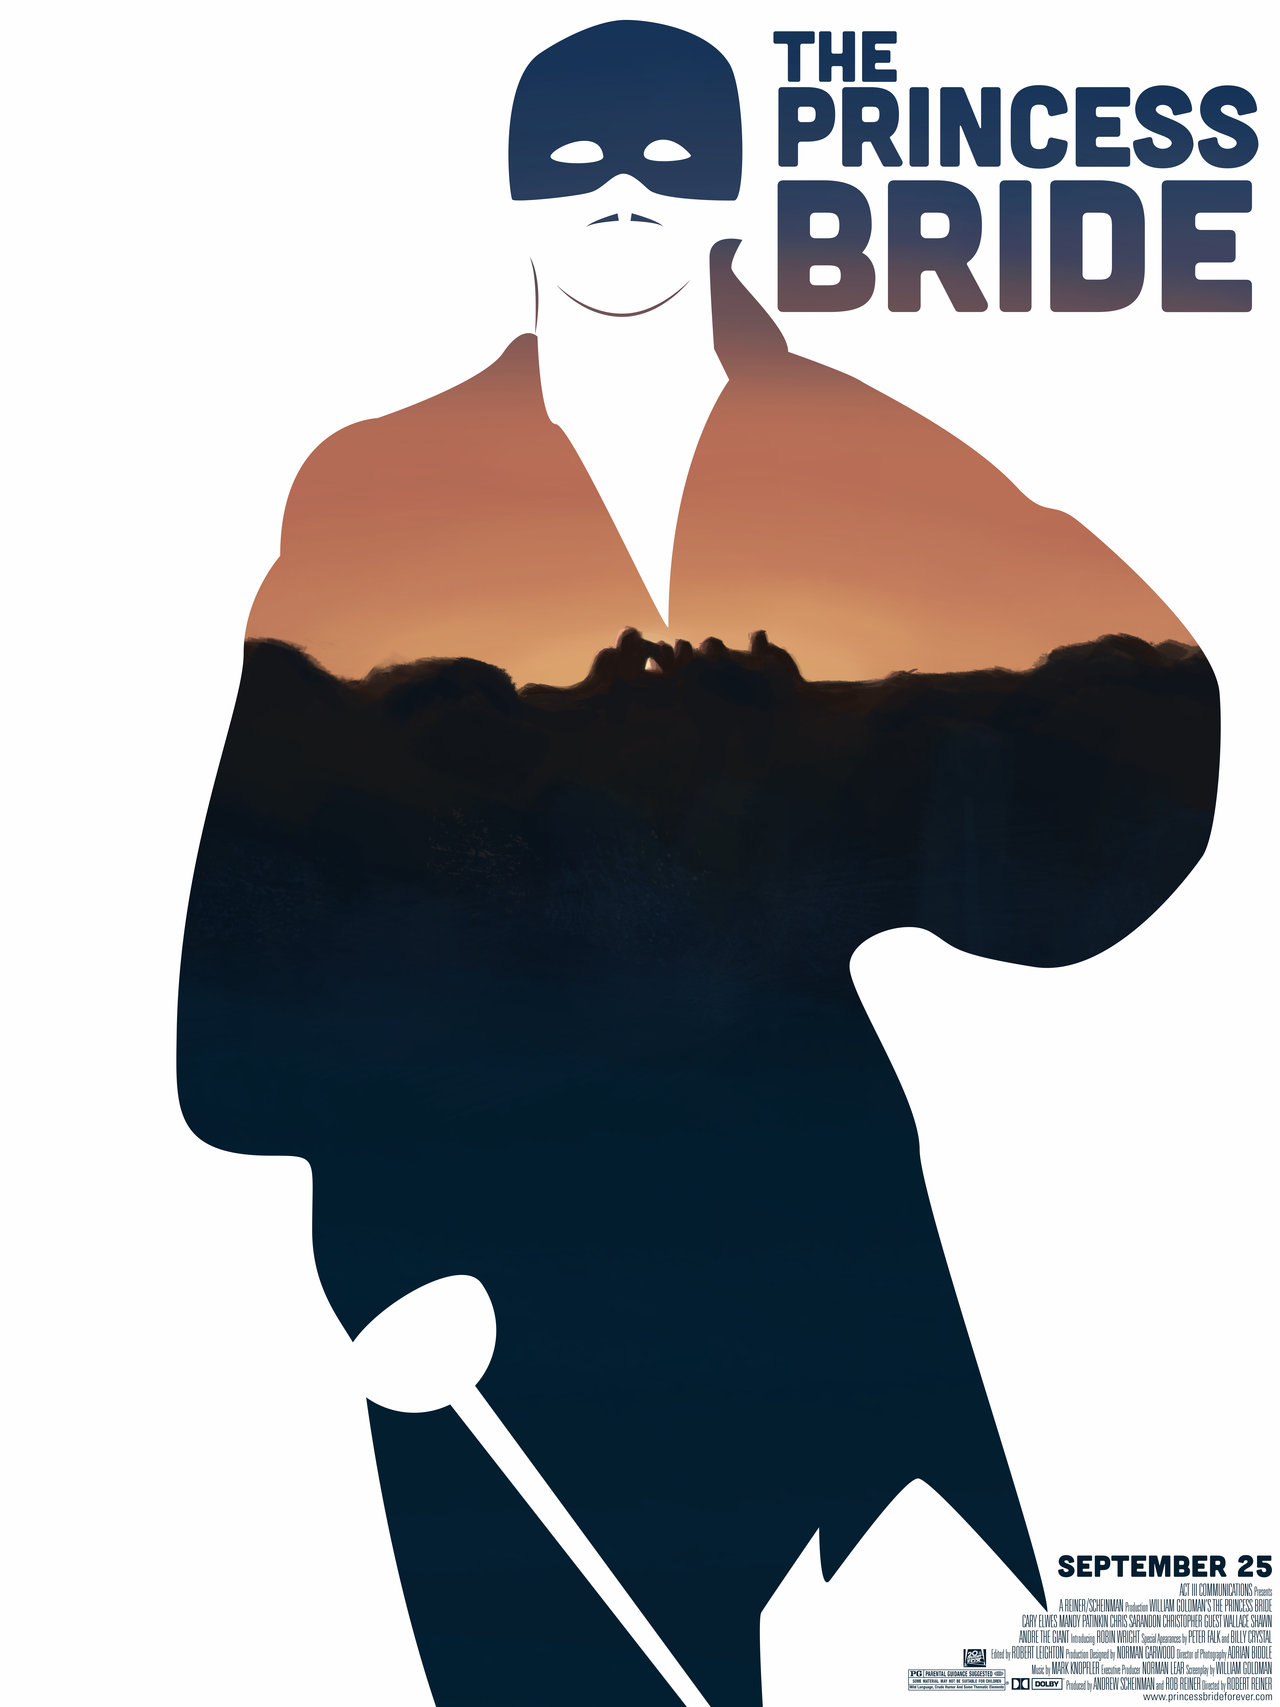 Princess Bride Poster by Taqbleiler on DeviantArt